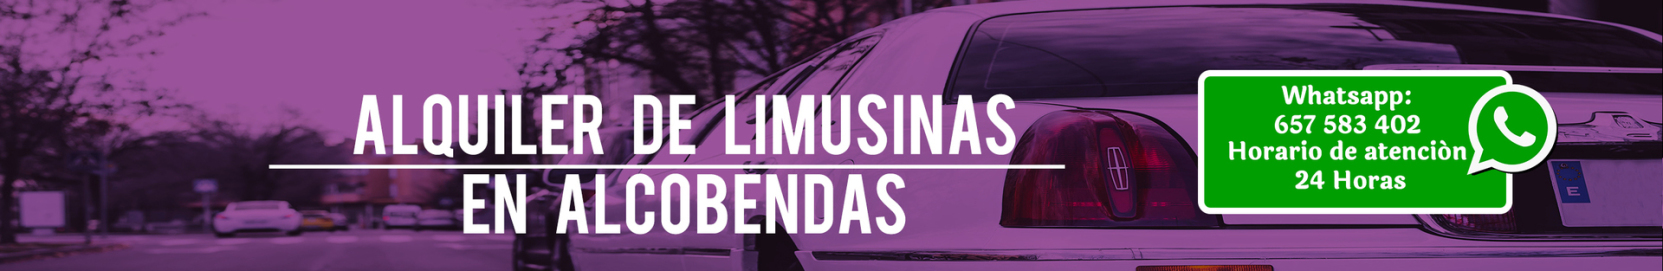 Alquiler de limusinas en Alcobendas